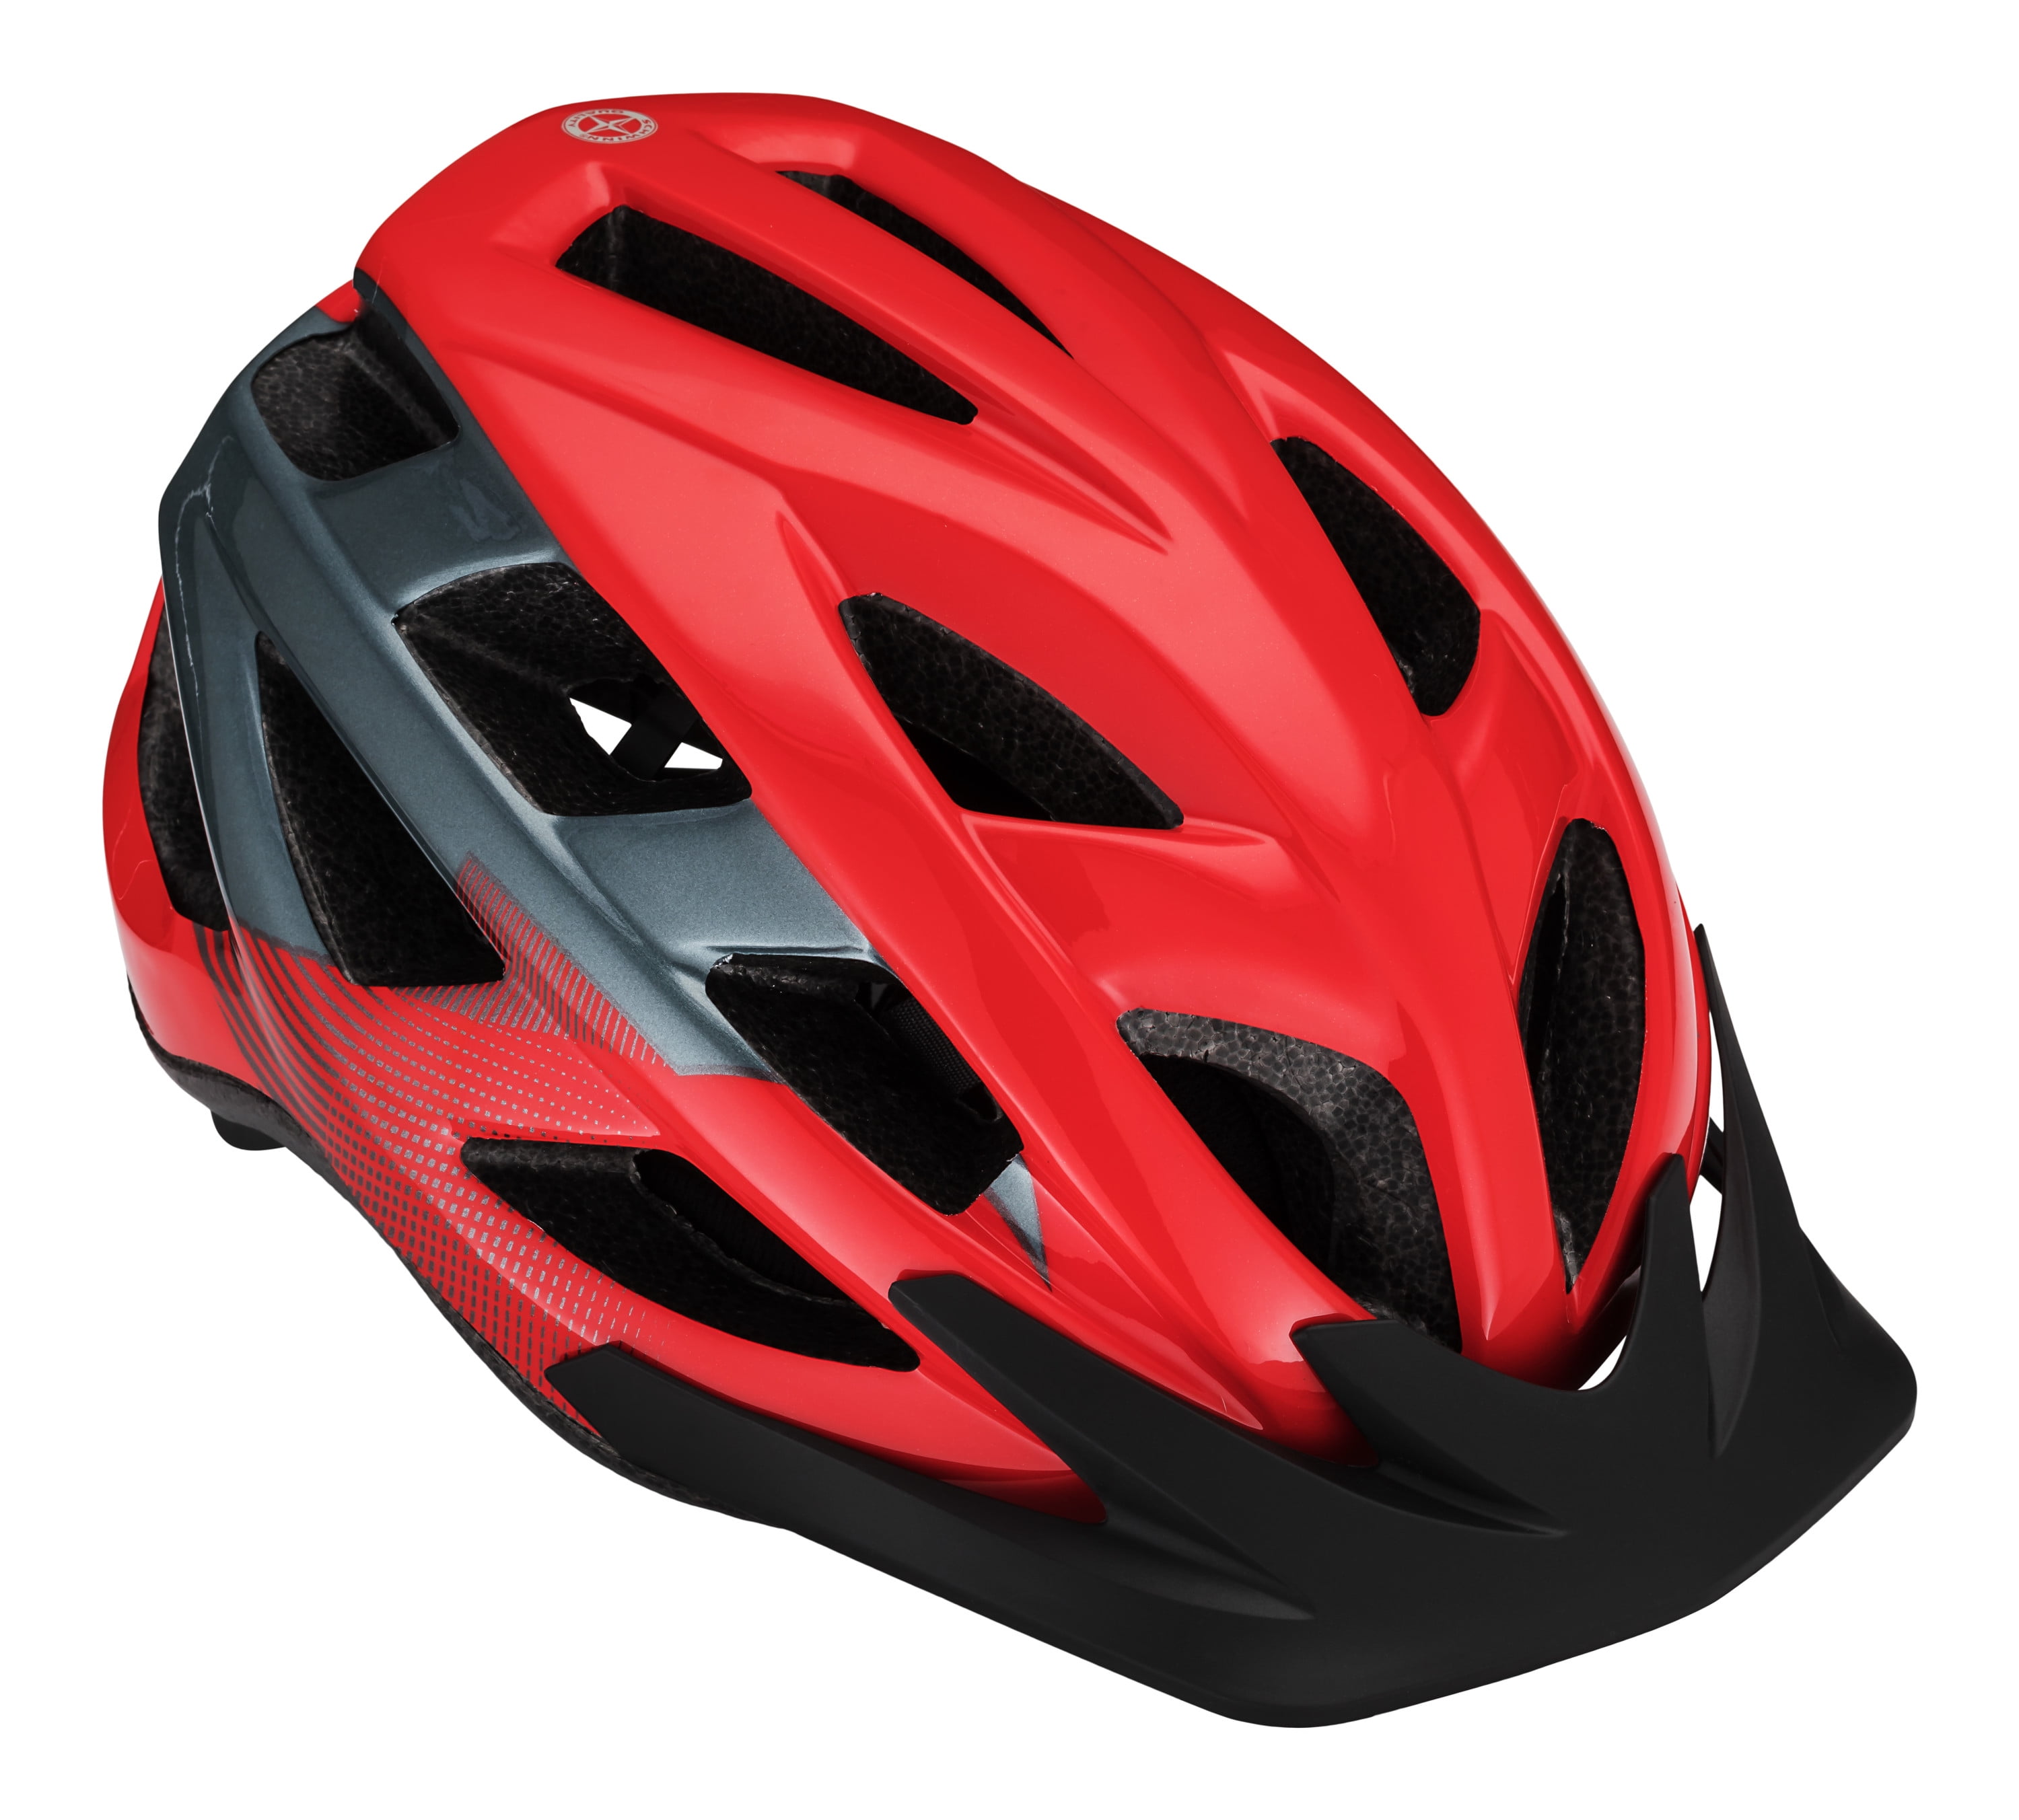 Dial Fit With Visor Schwinn Breeze Youth Bike Helmet 360 degree Comfort Ages 8 